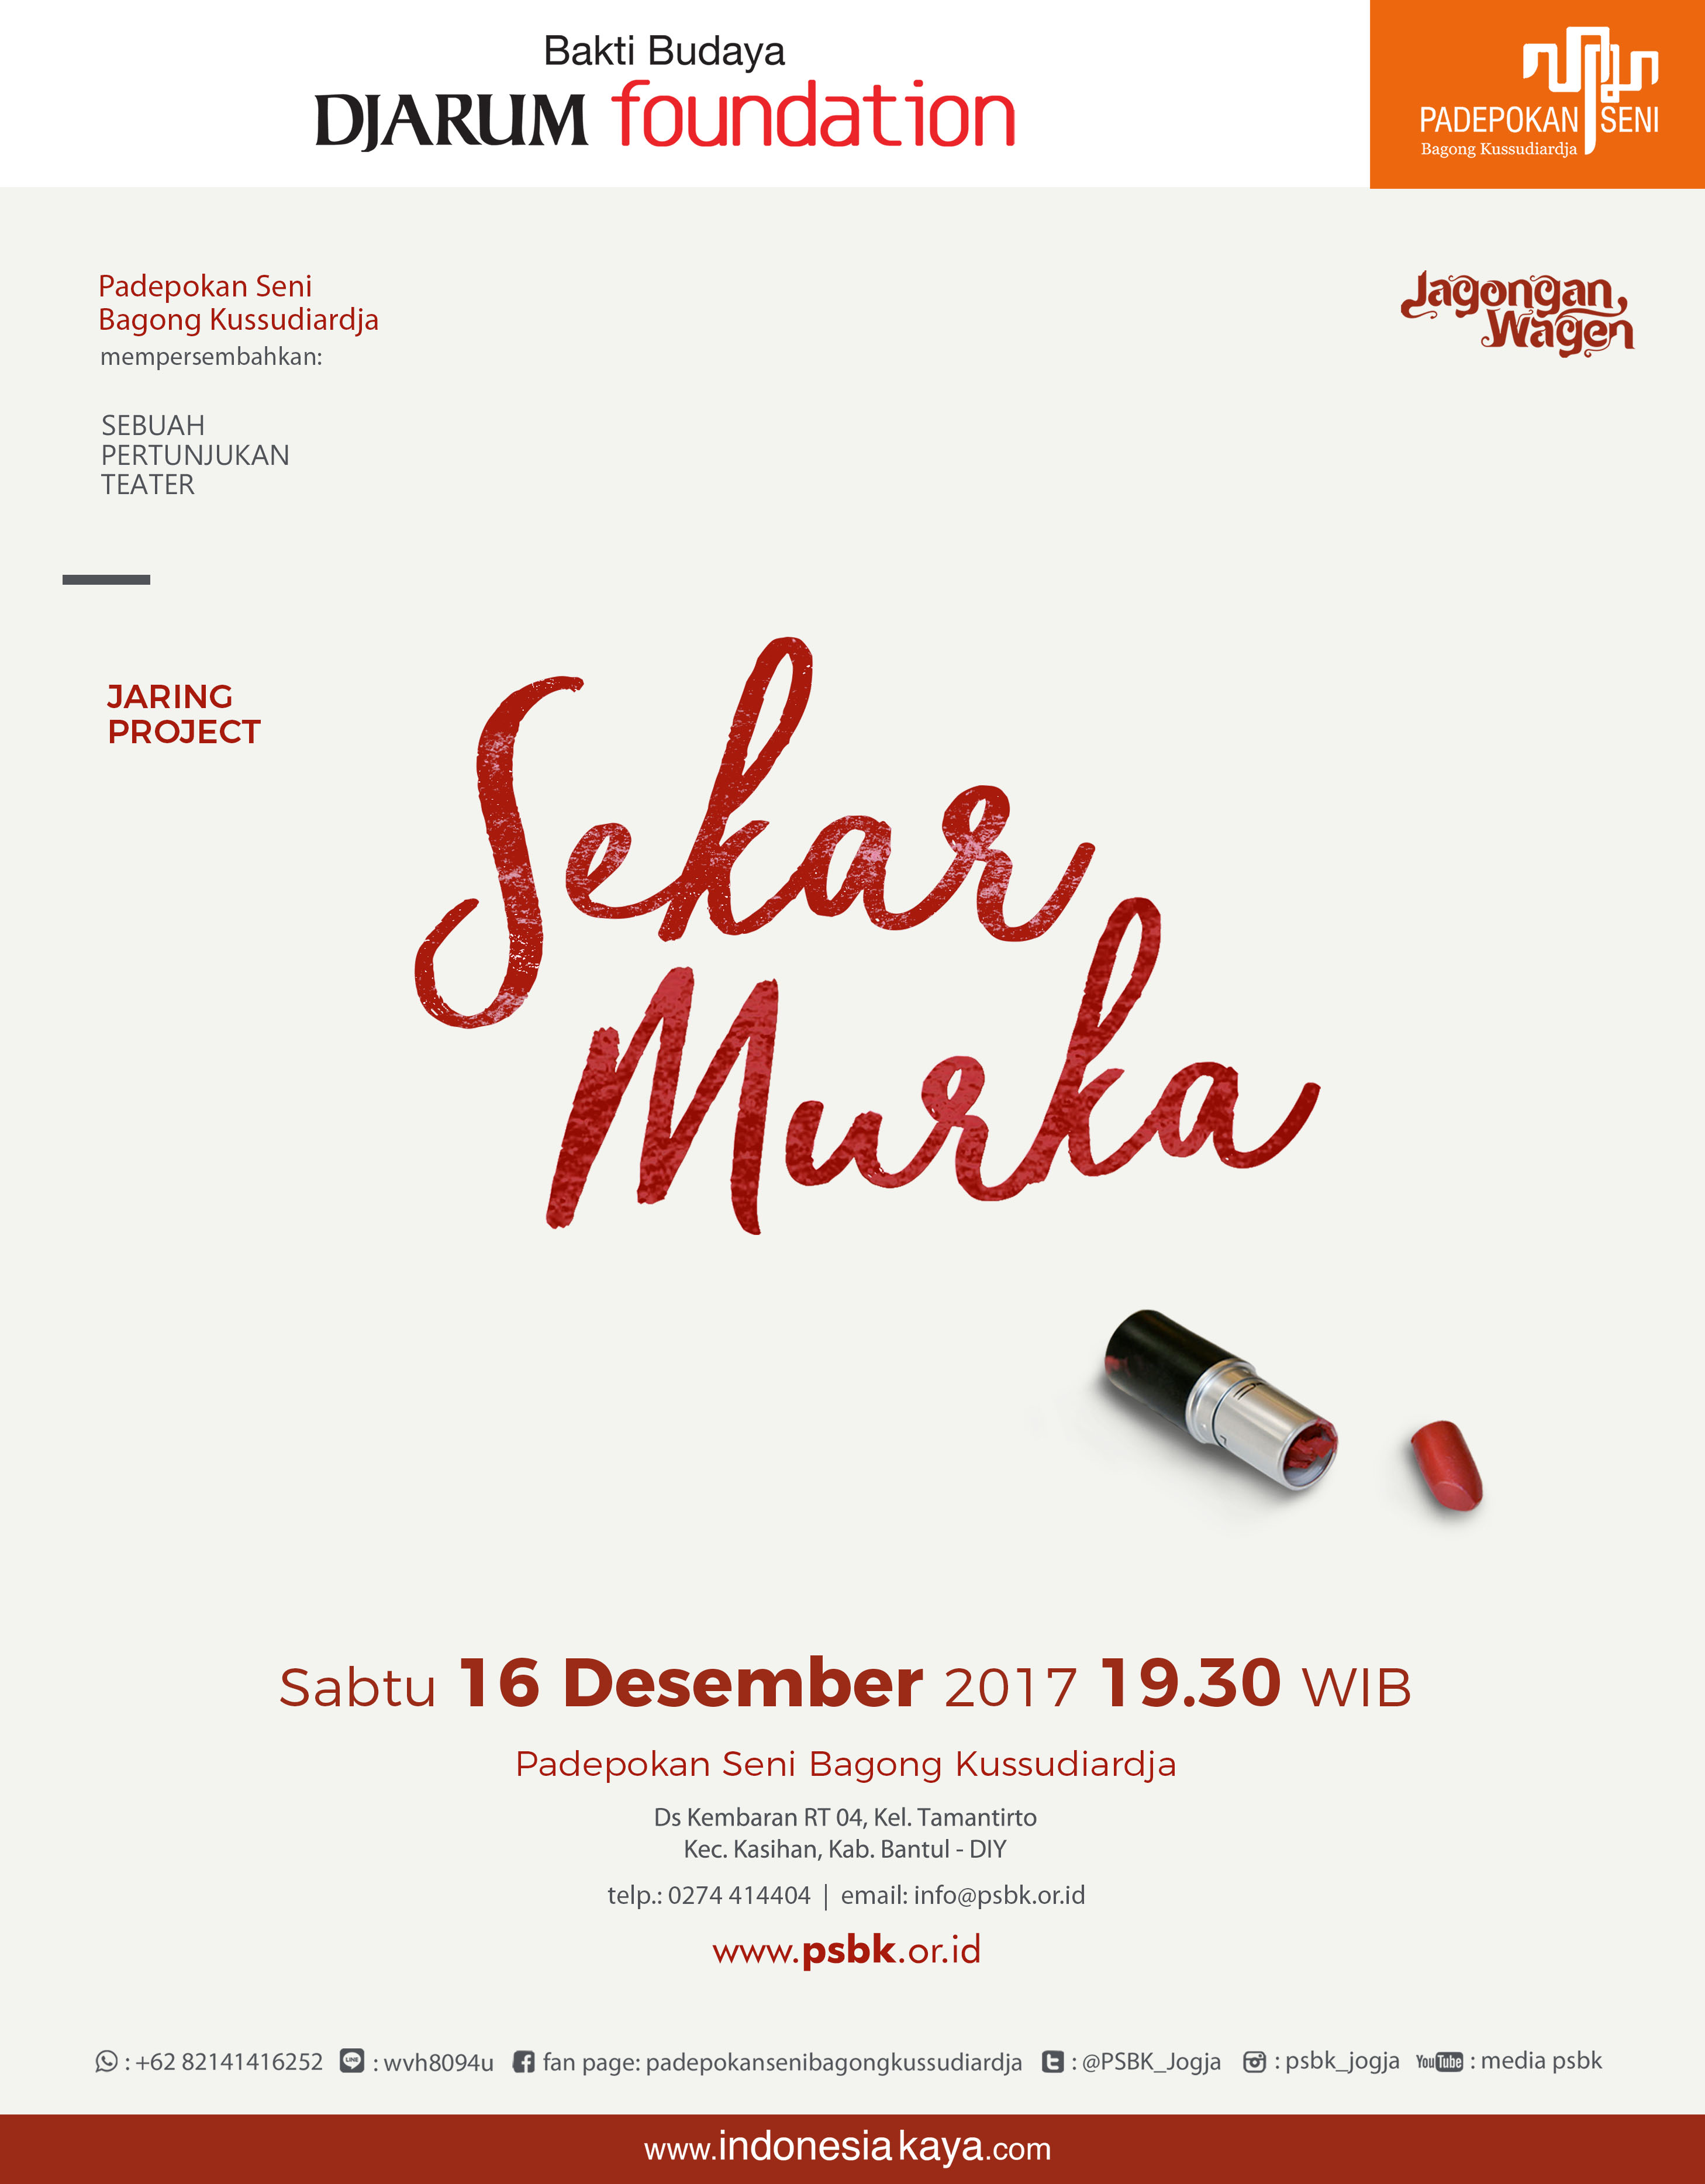 Teater | Sekar Murka | Jaring Project